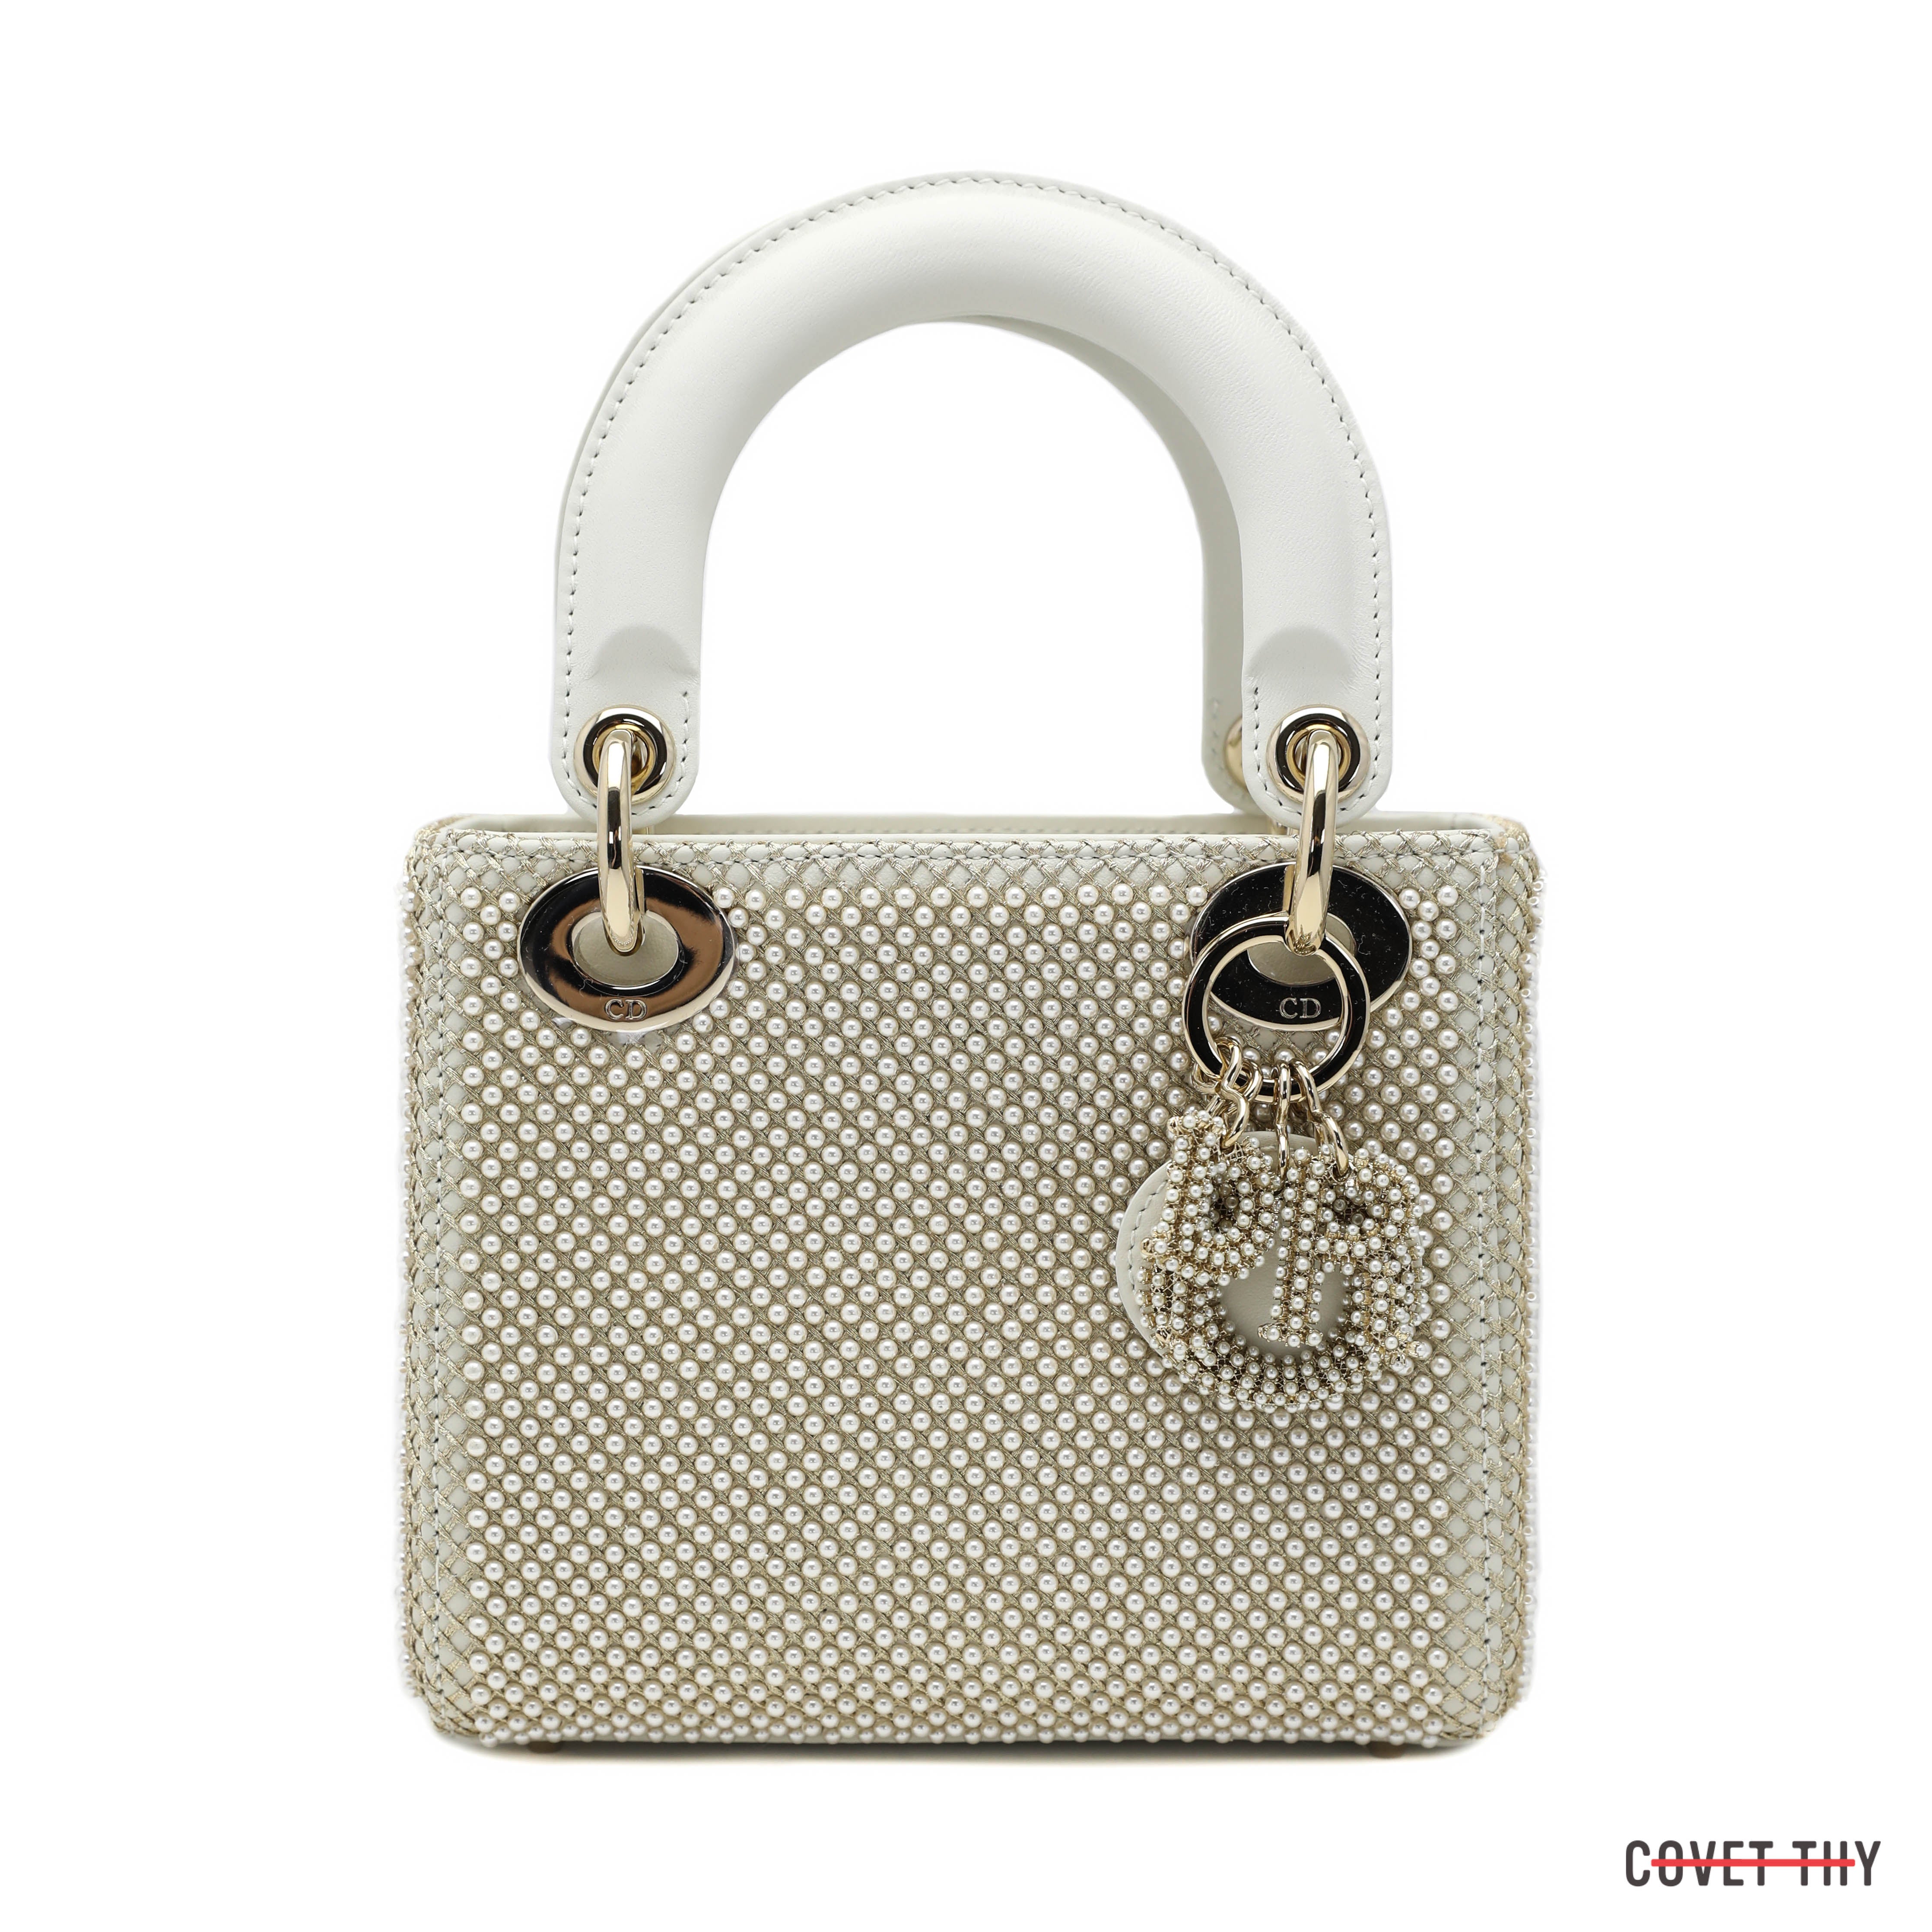 Lady Dior Limited Edition Mini Pearl Handbag, Champagne Hardware